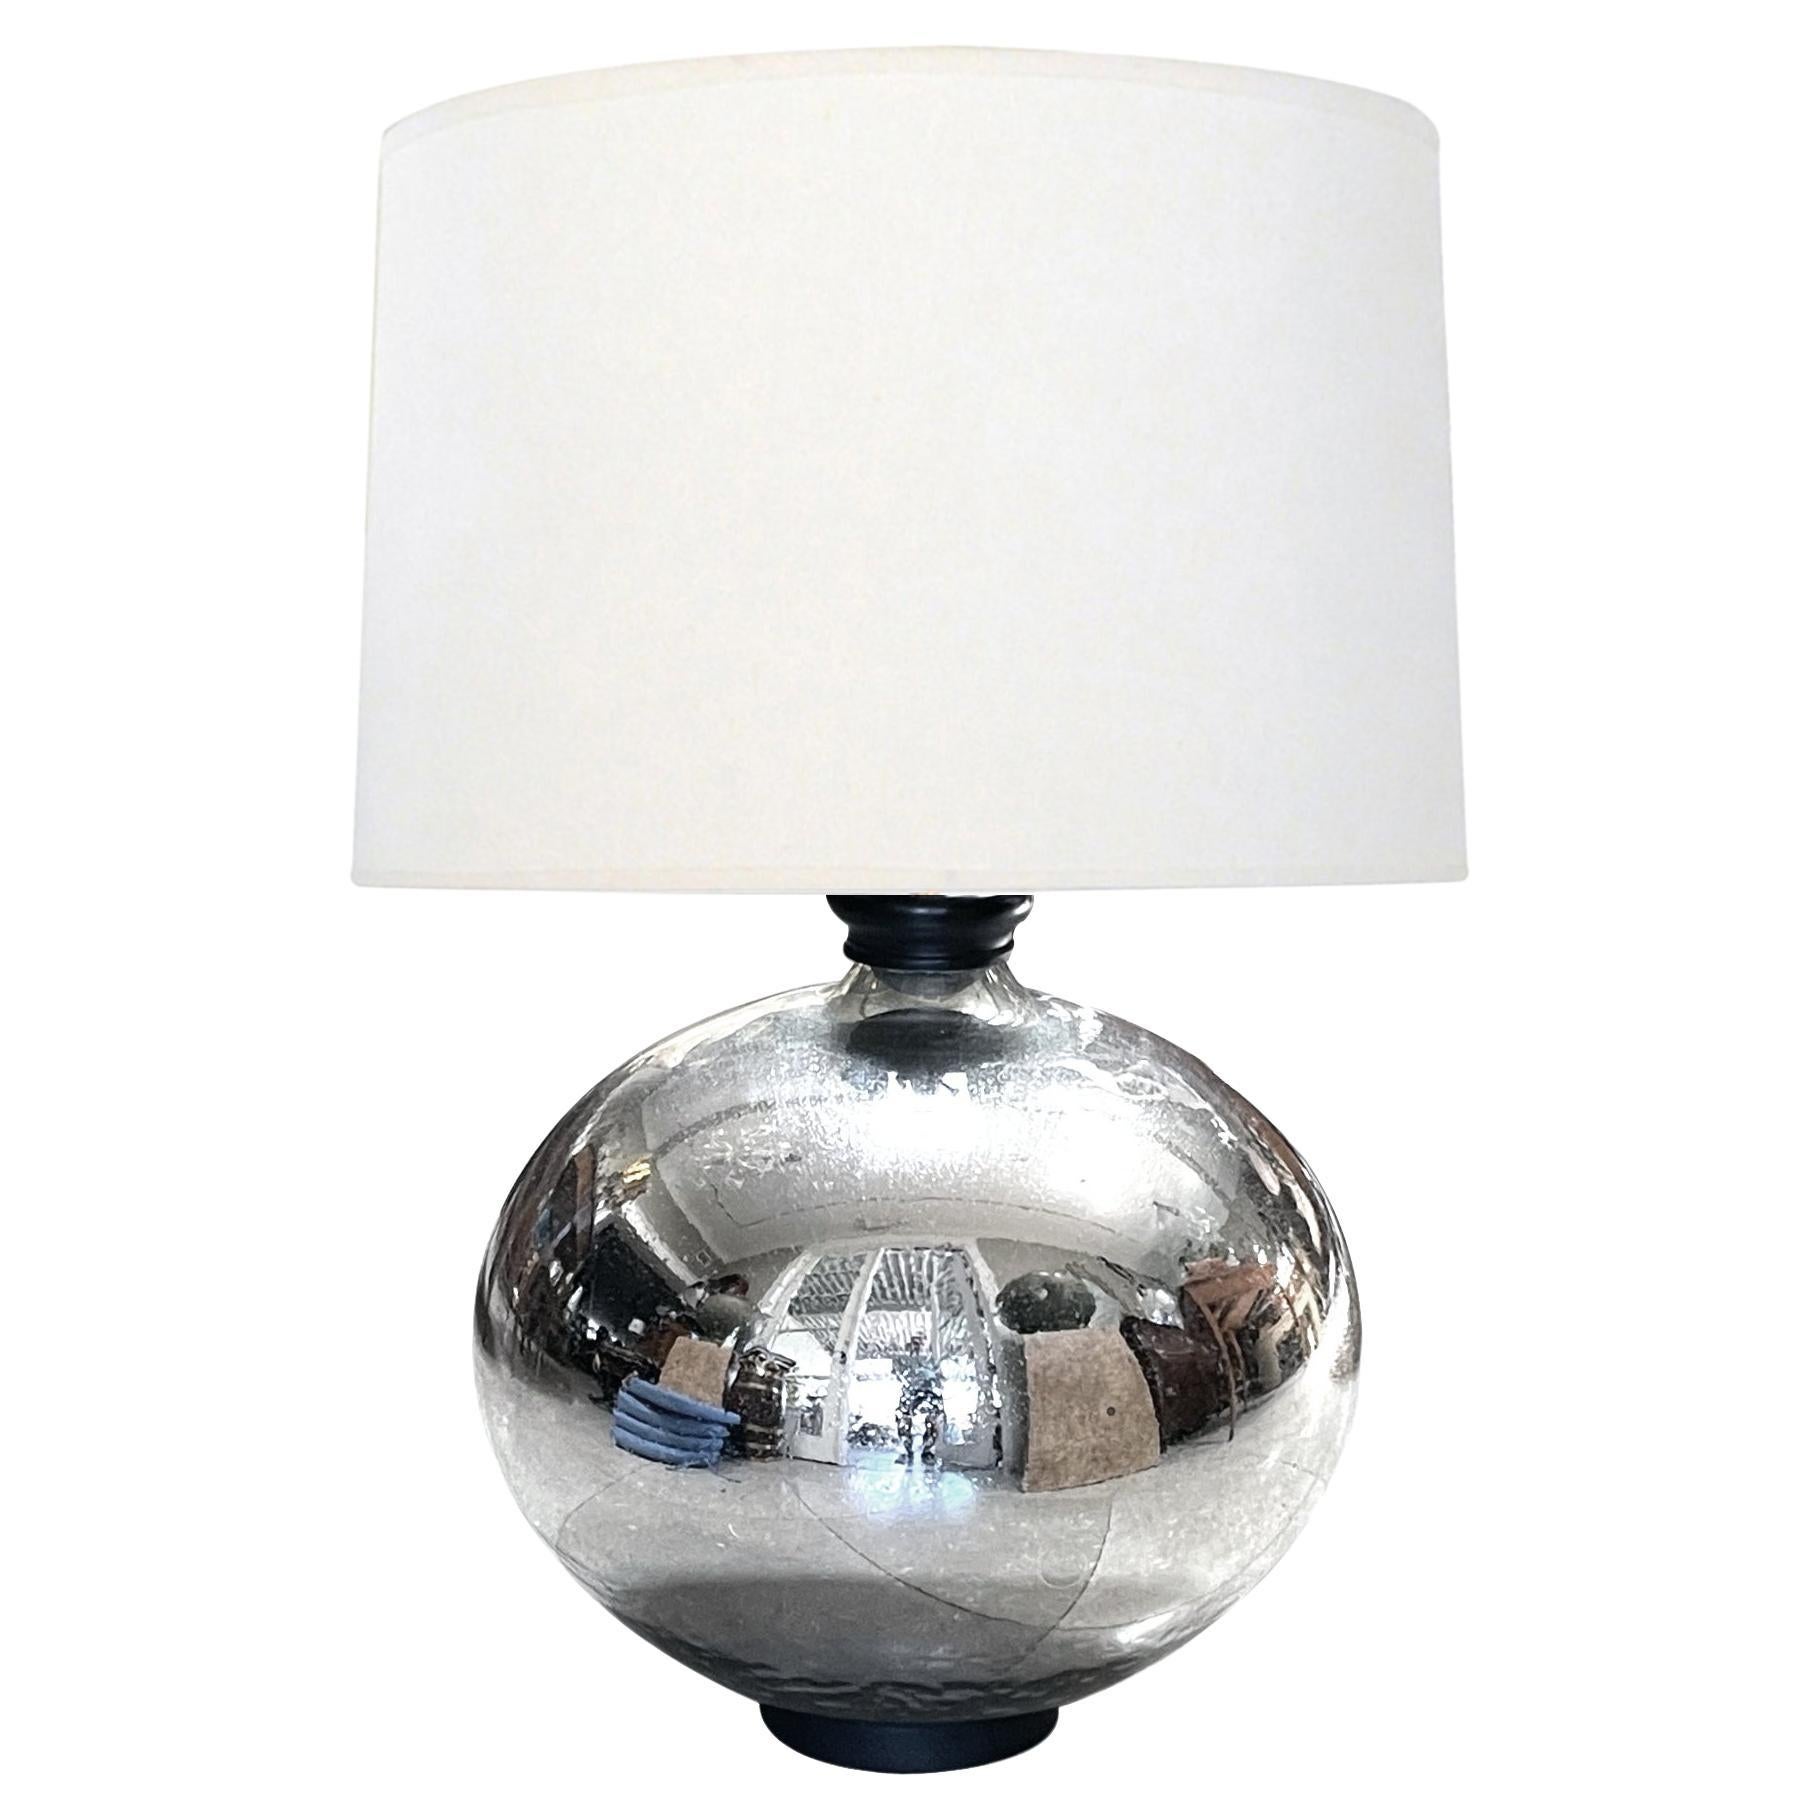 Massive Mercury Glass spheroid Lamp